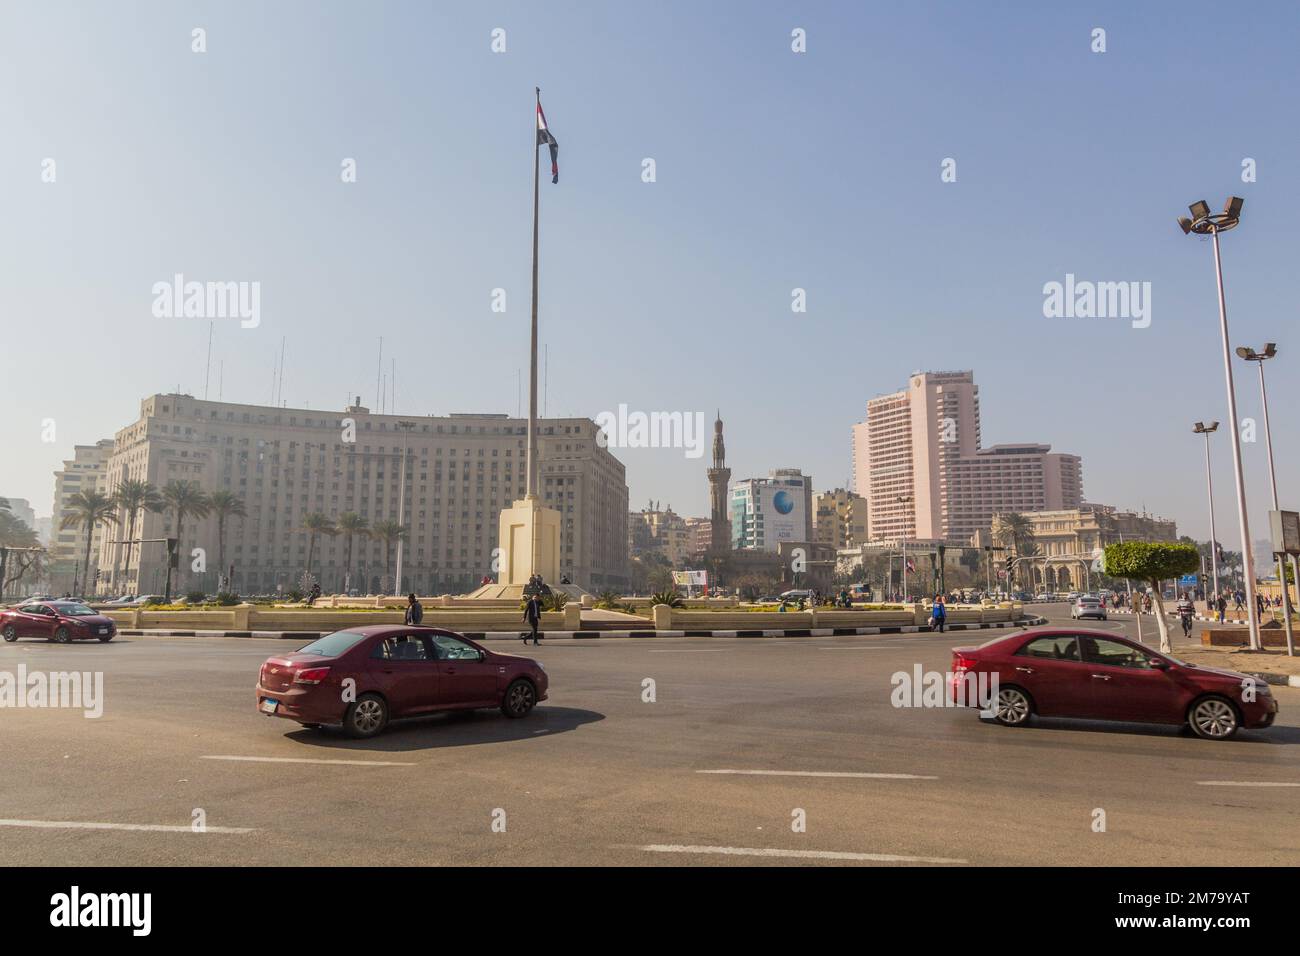 CAIRO, EGYPT - JANUARY 28, 2019: Tahrir square in Cairo, Egypt Stock Photo